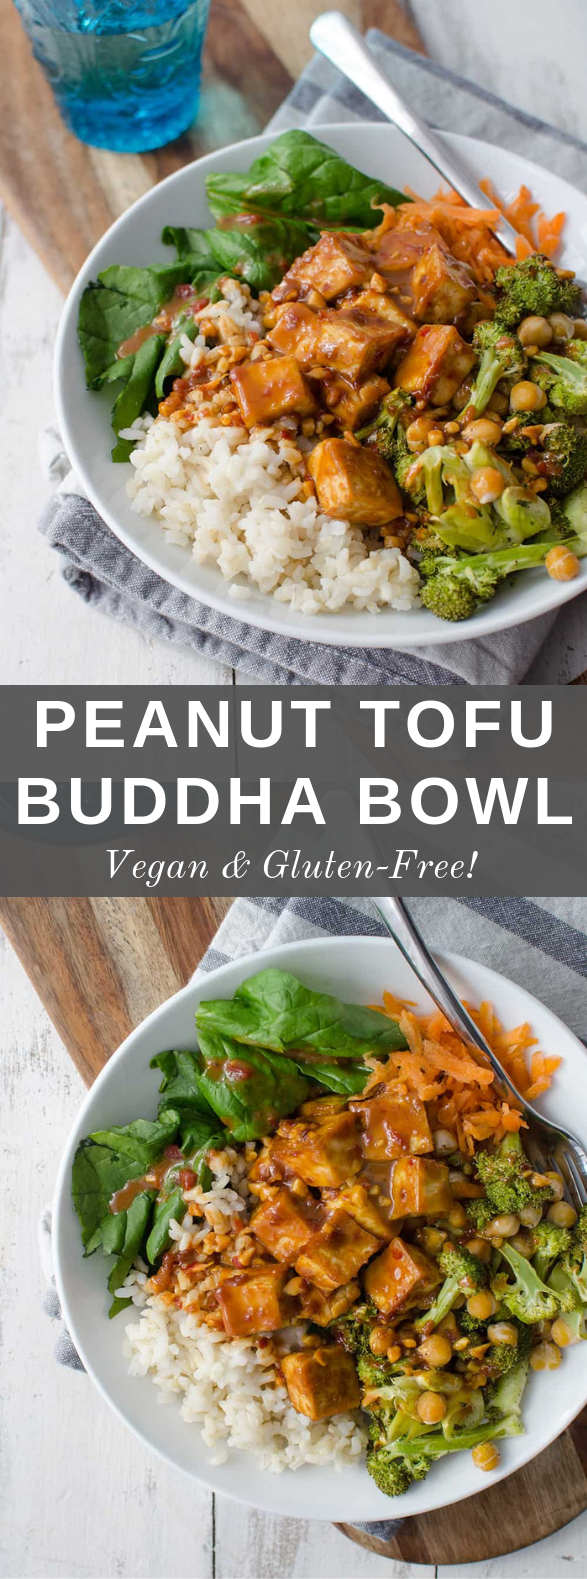 Peanut Tofu Buddha Bowl #vegetarian #vegan